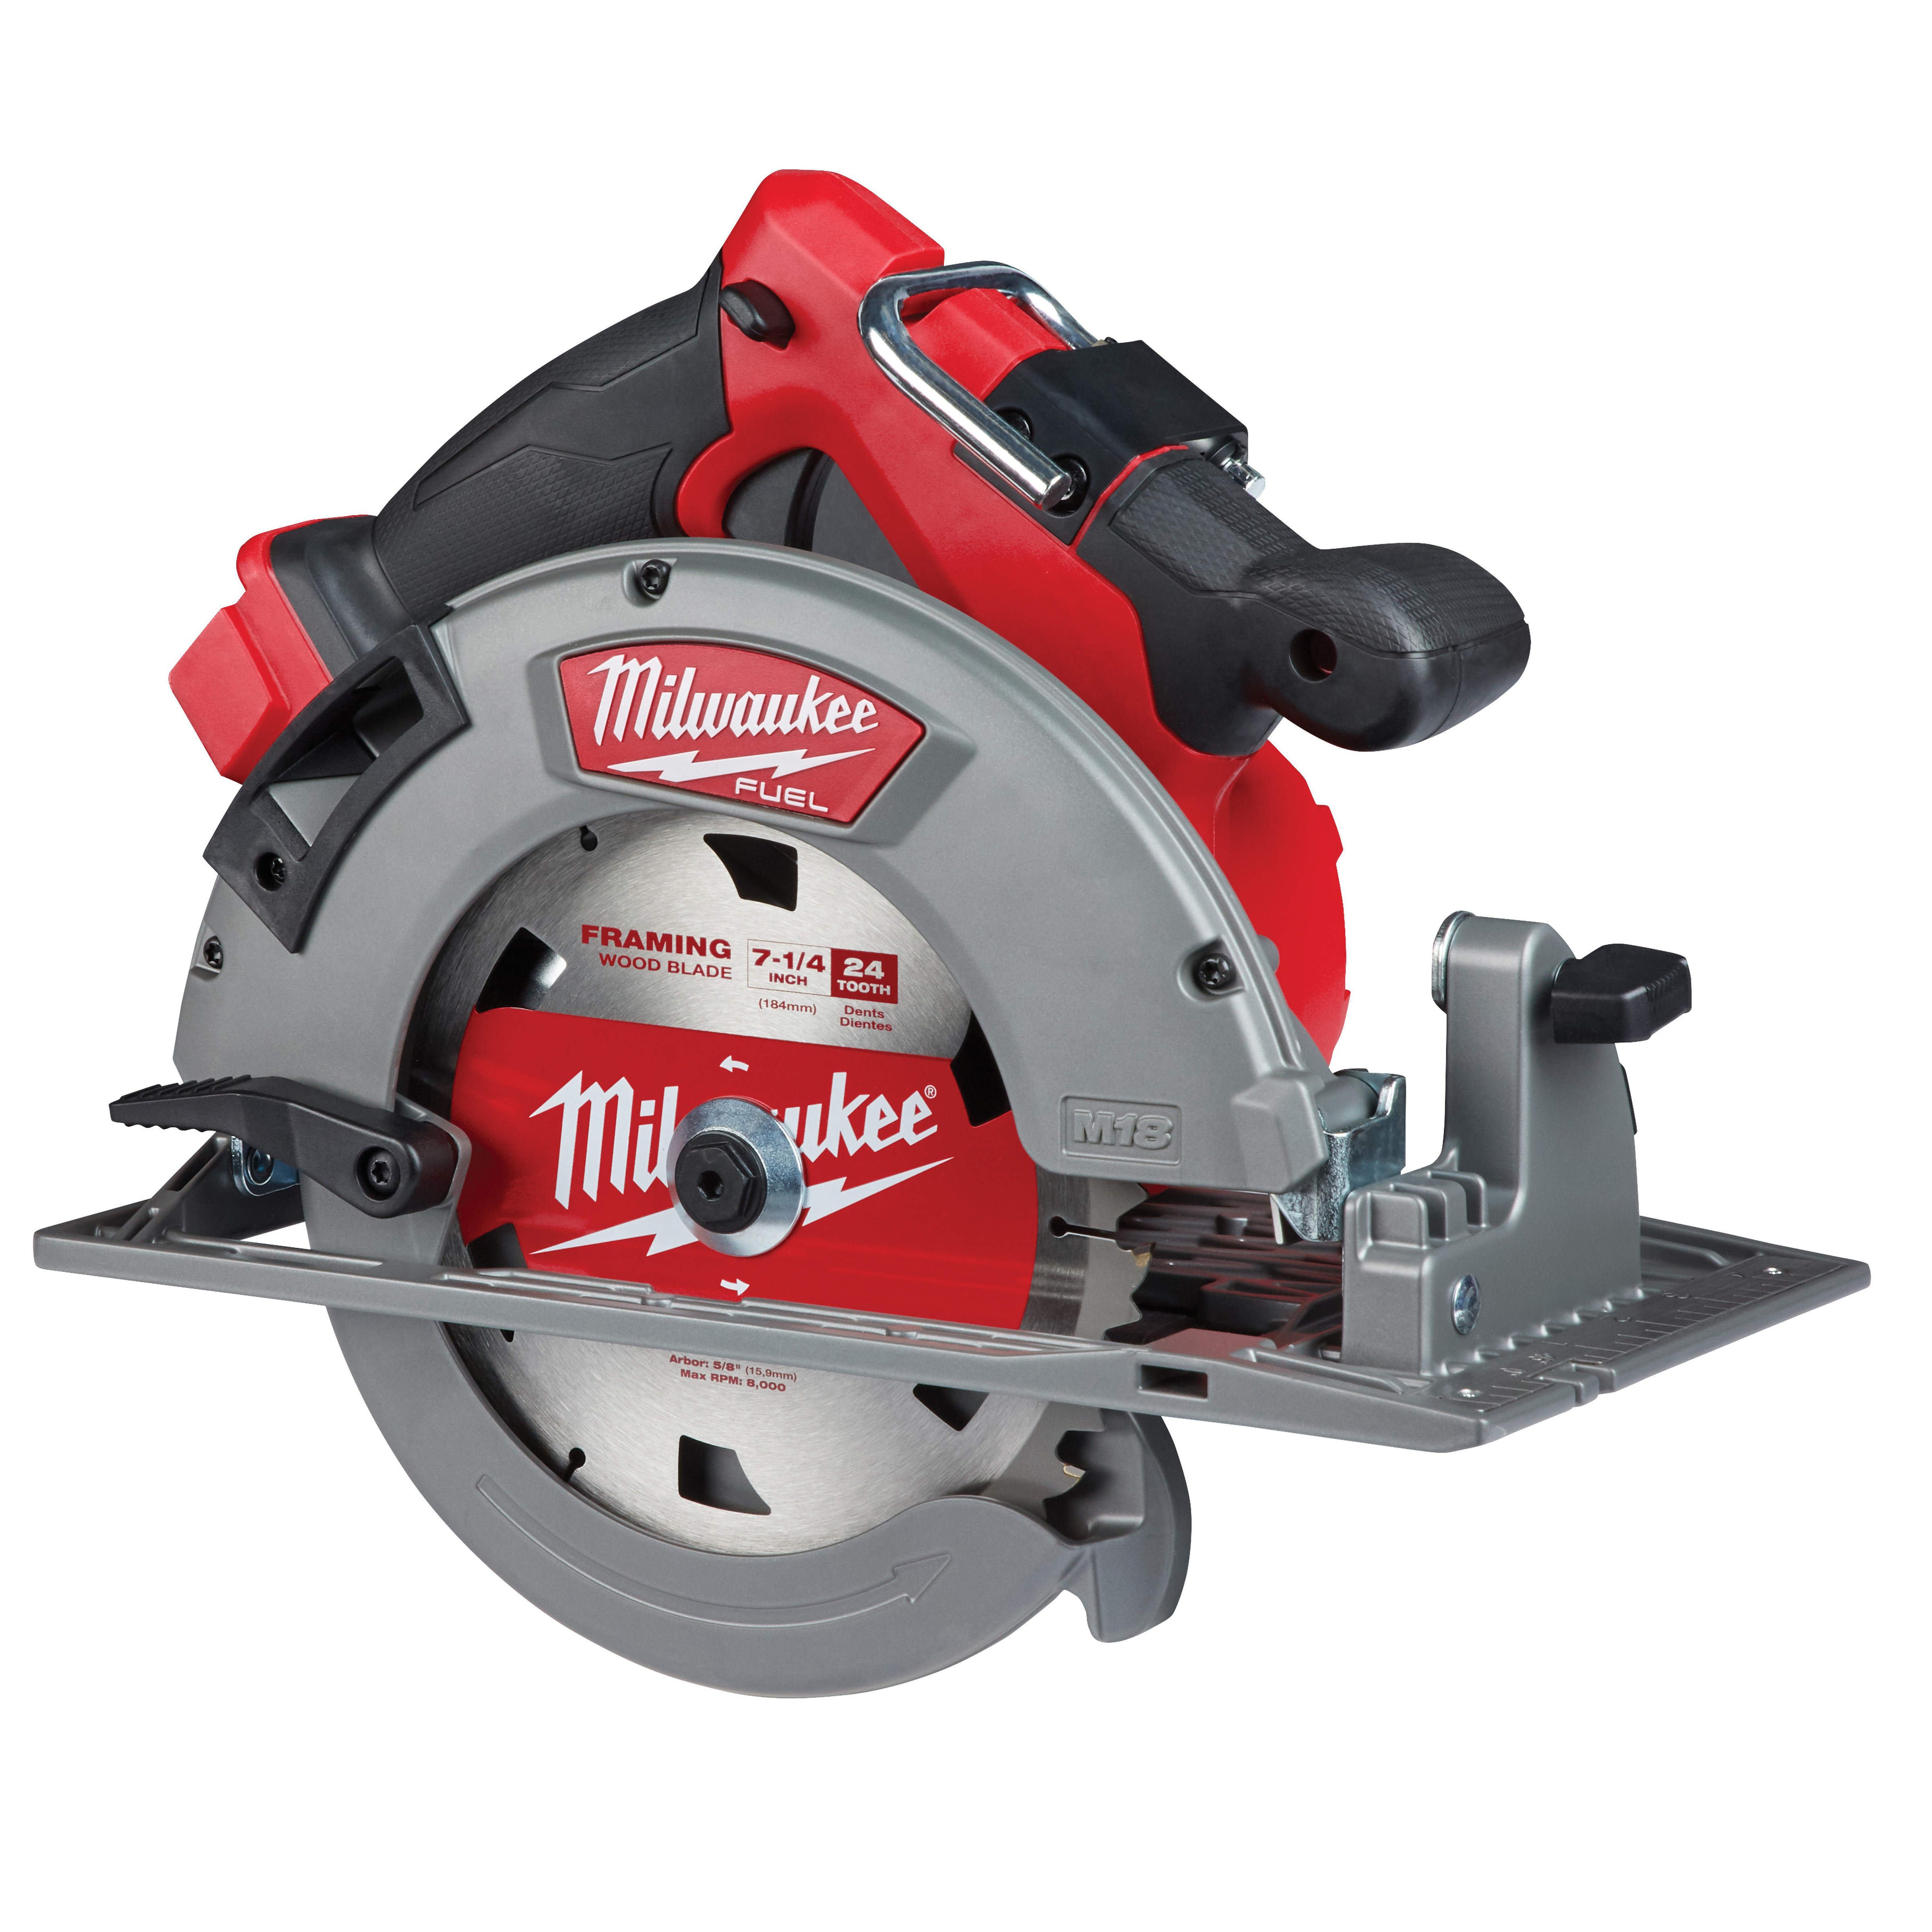 Milwaukee® M18 FUEL™ 2732-20 Circular Saw, Tool/Kit: Tool, 7-1/4 in Dia Blade, 1-7/8 in, 2-1/2 in D Cutting, 18 VDC